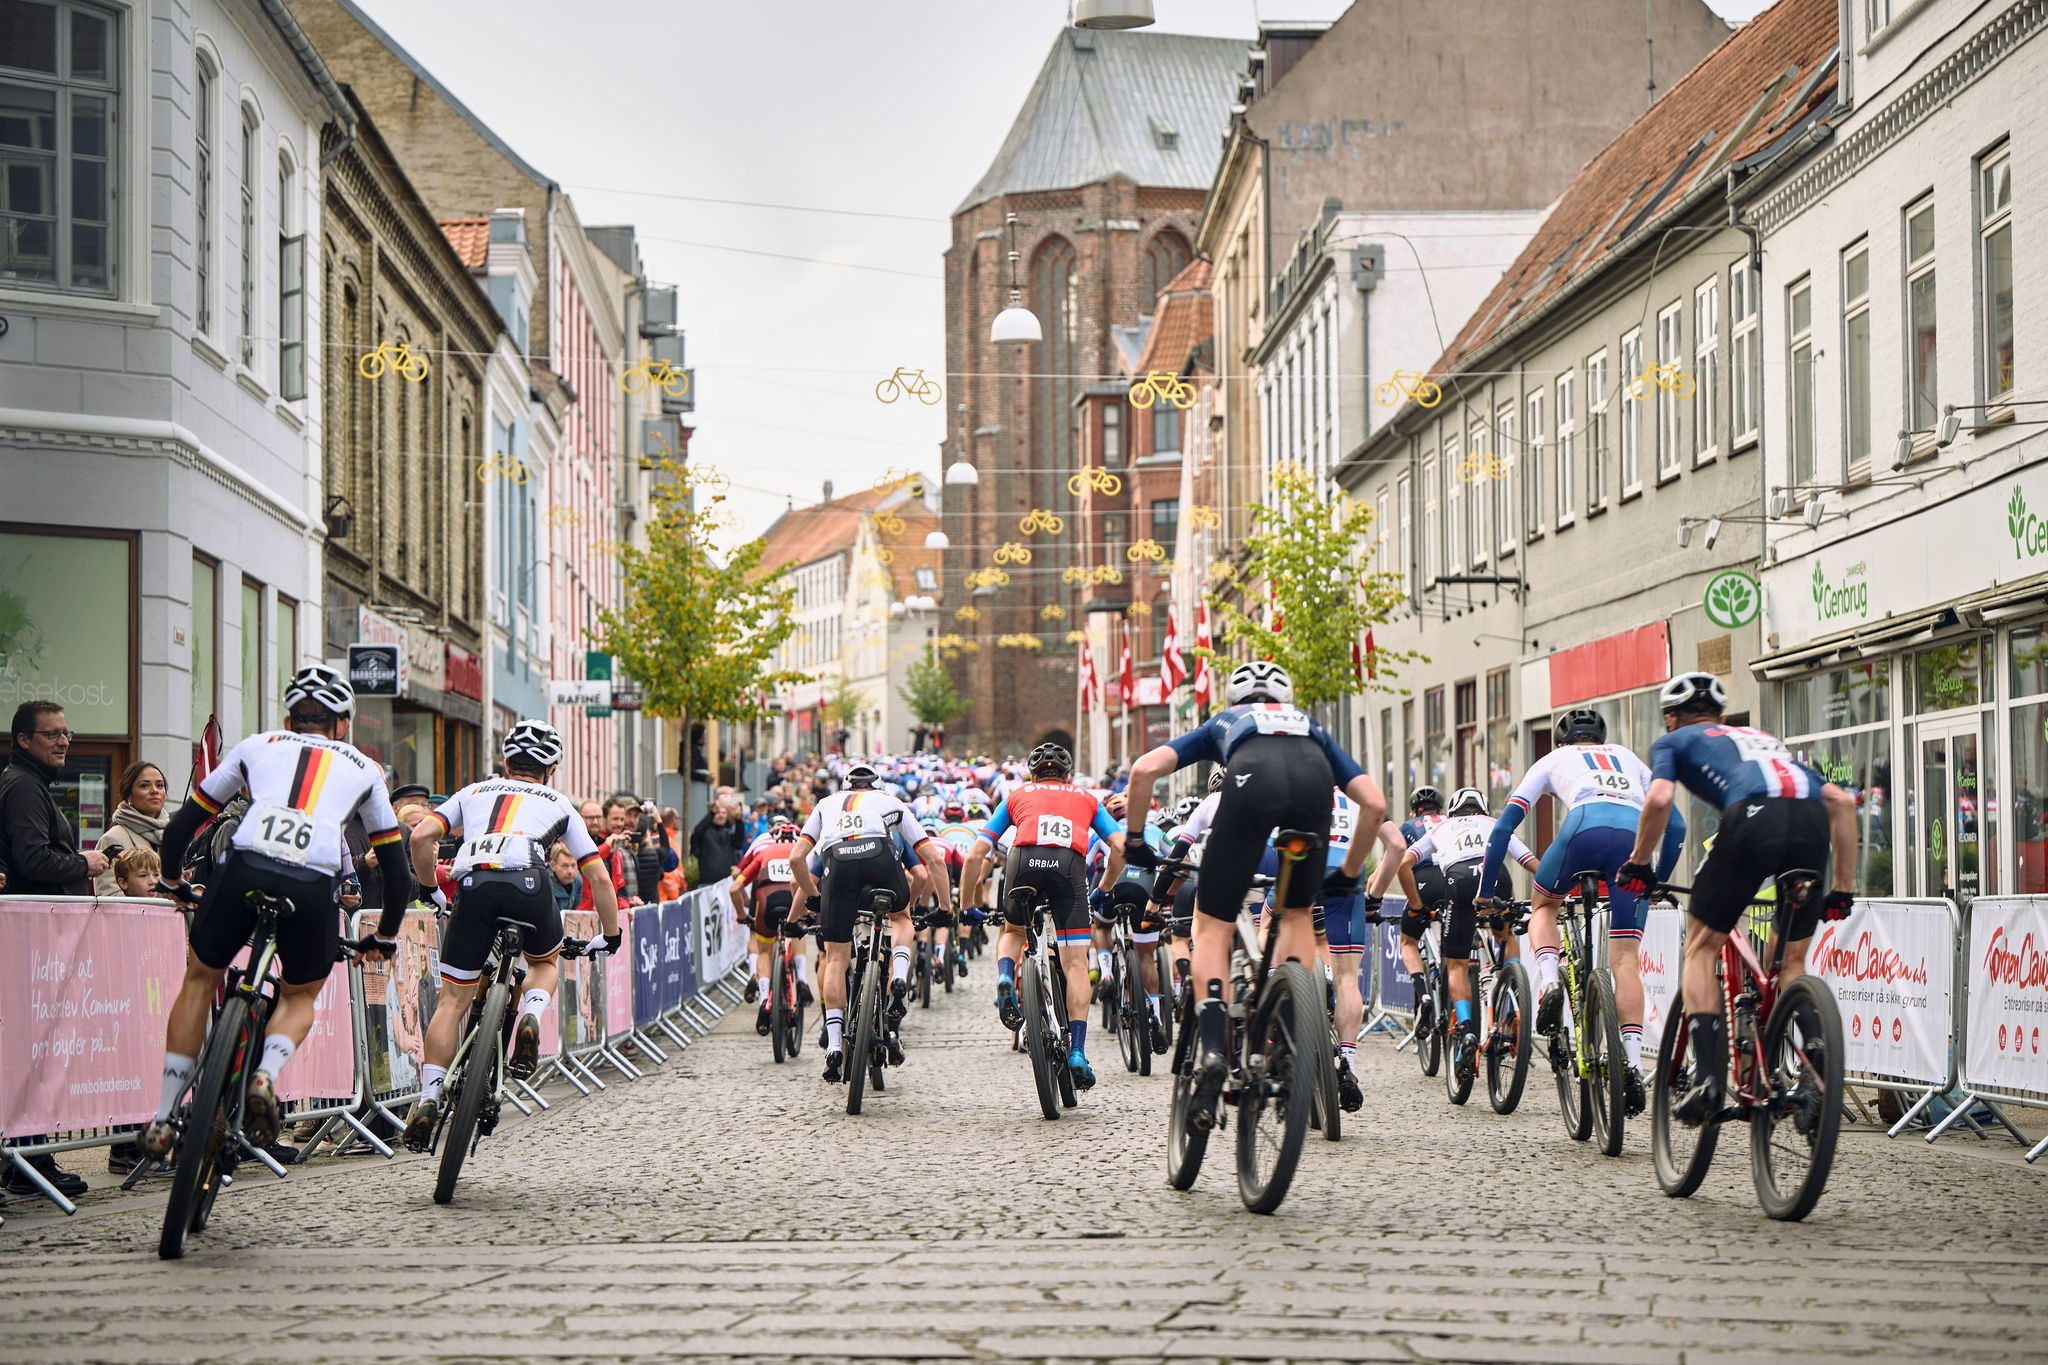 The Danish town of Haderslev was the venue for the UCI Mountain Bike Marathon World Championships ©Ard Jongsma (Triangle Region)